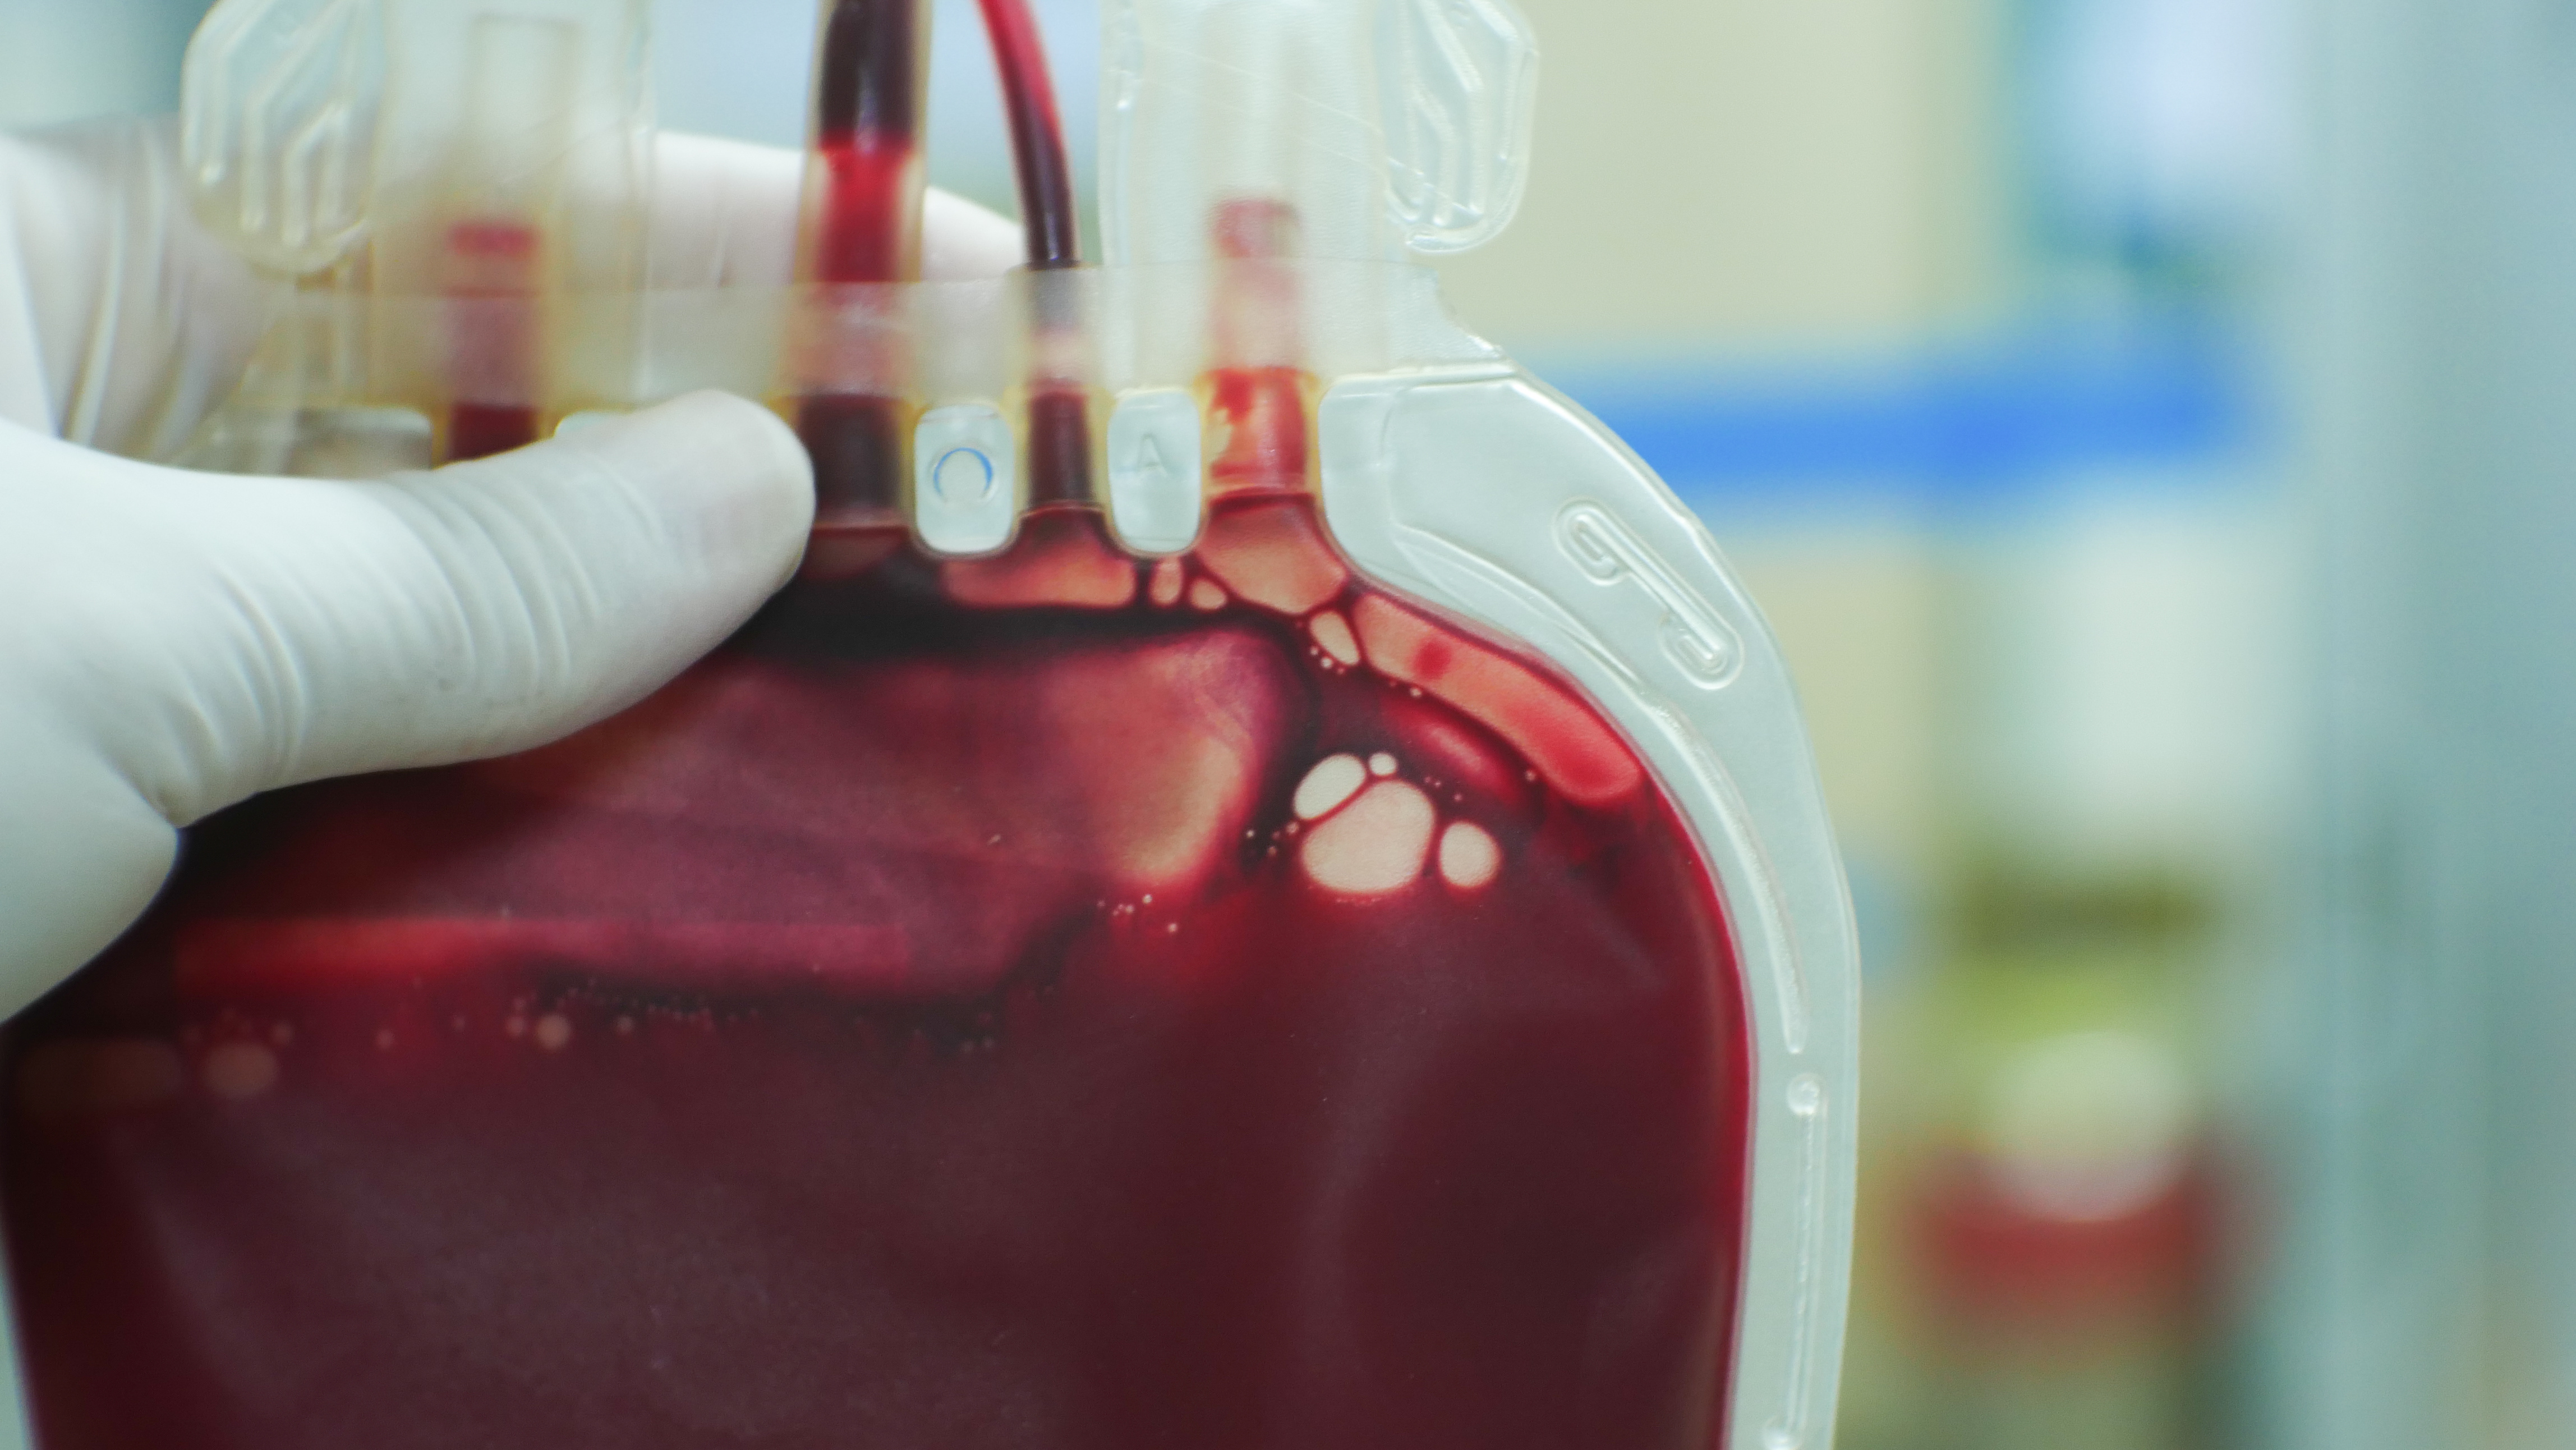 Blood Type and Blood Donation During Coronavirus